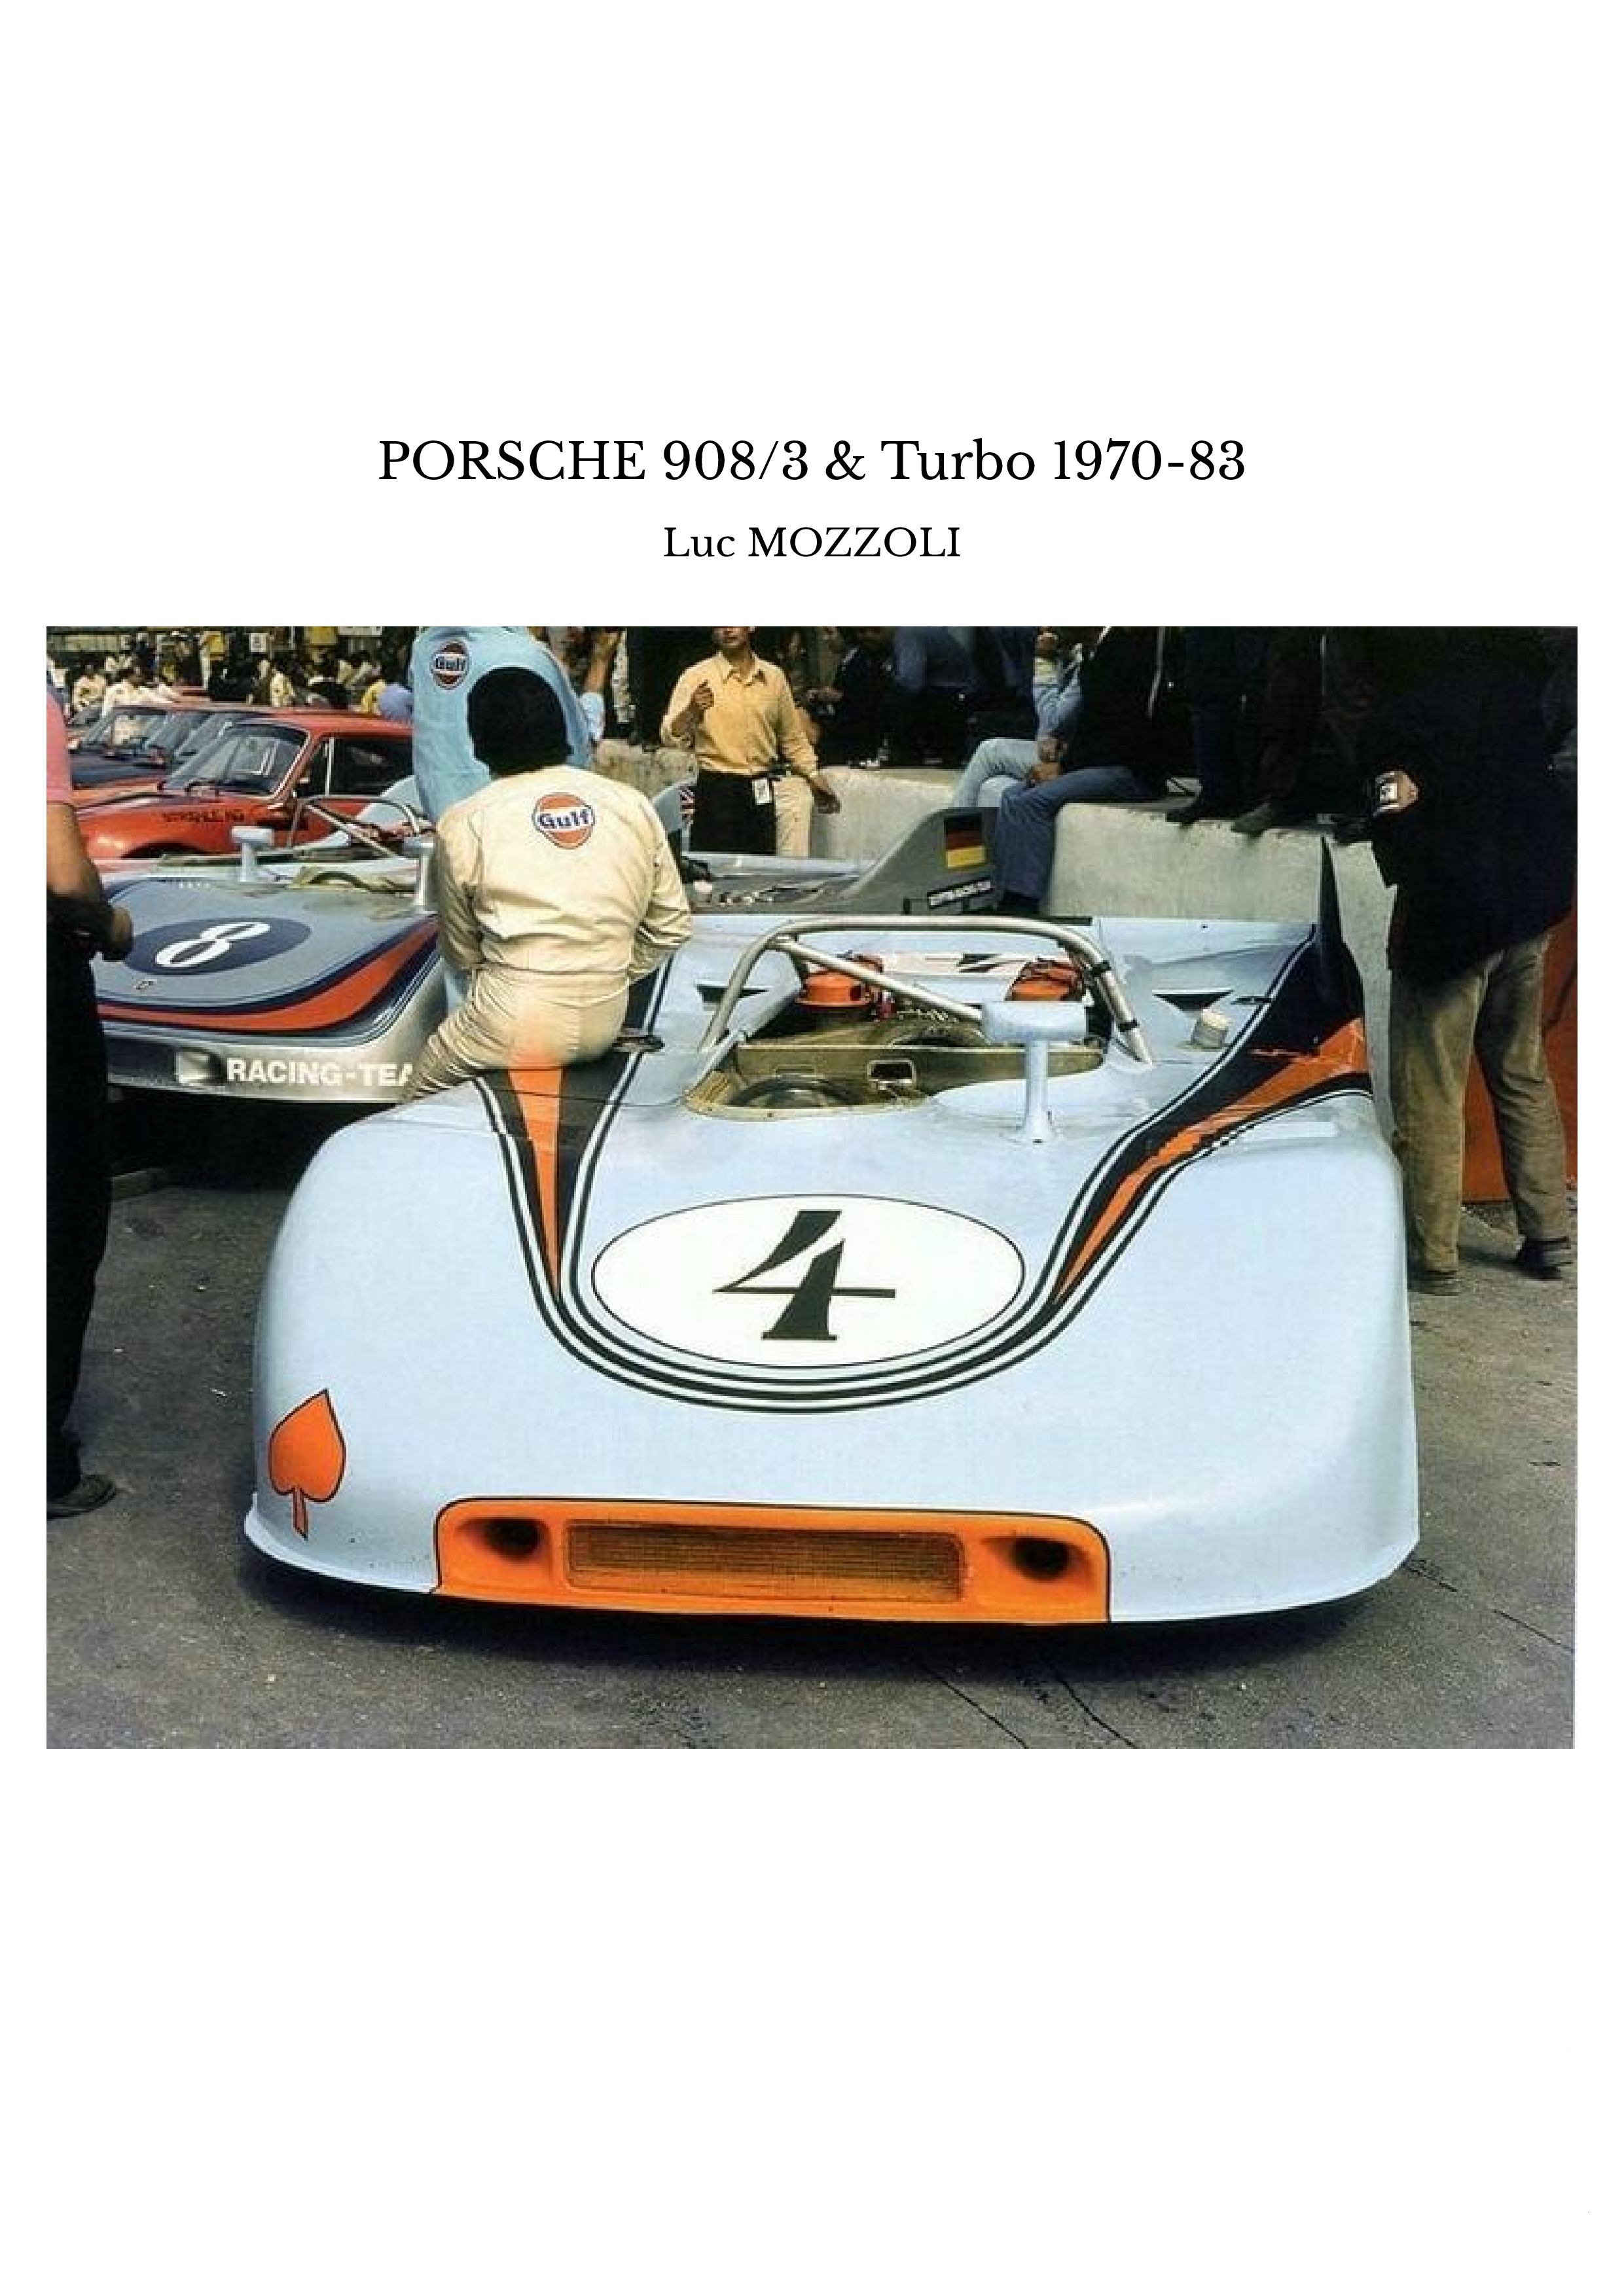 PORSCHE 908/3 & Turbo 1970-83